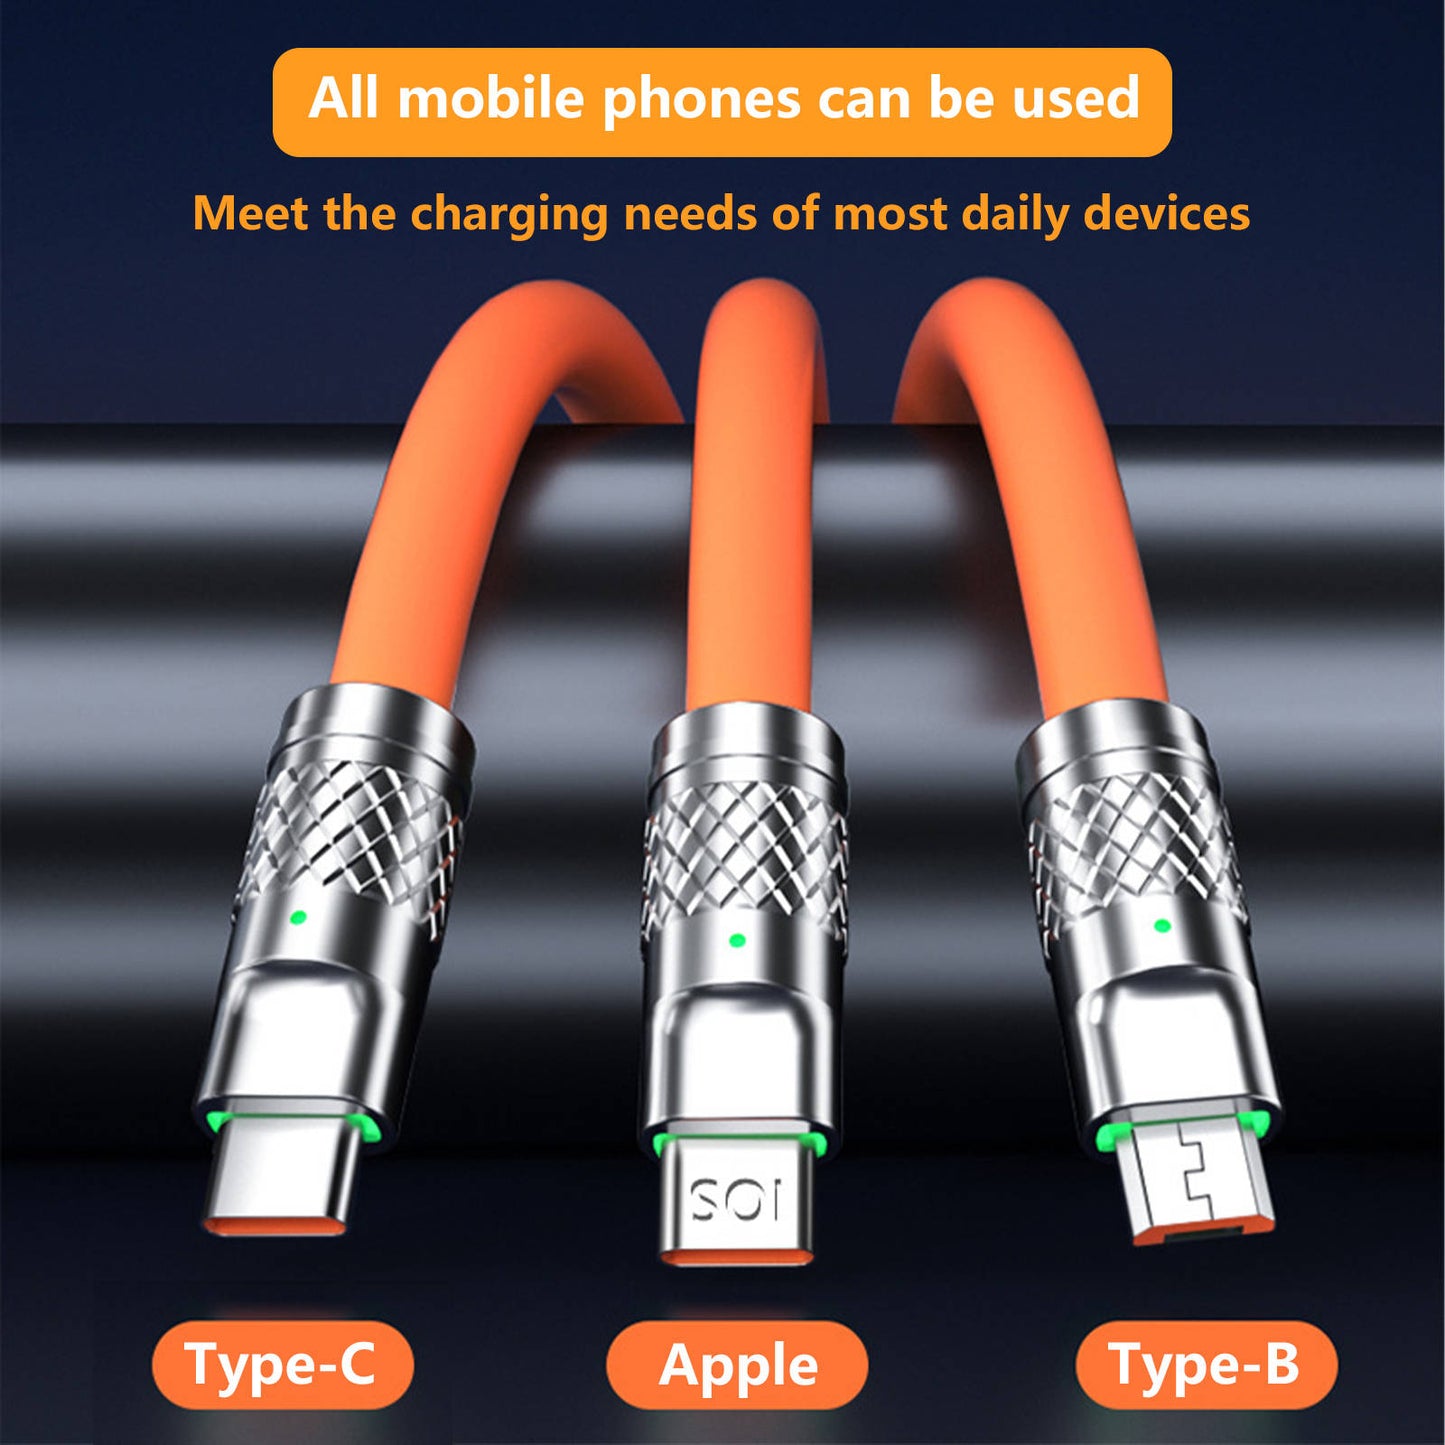 Mobax 120W Zinc-Alloy Super Fast Charging Belt Lights Three-In-One Data Line Orange